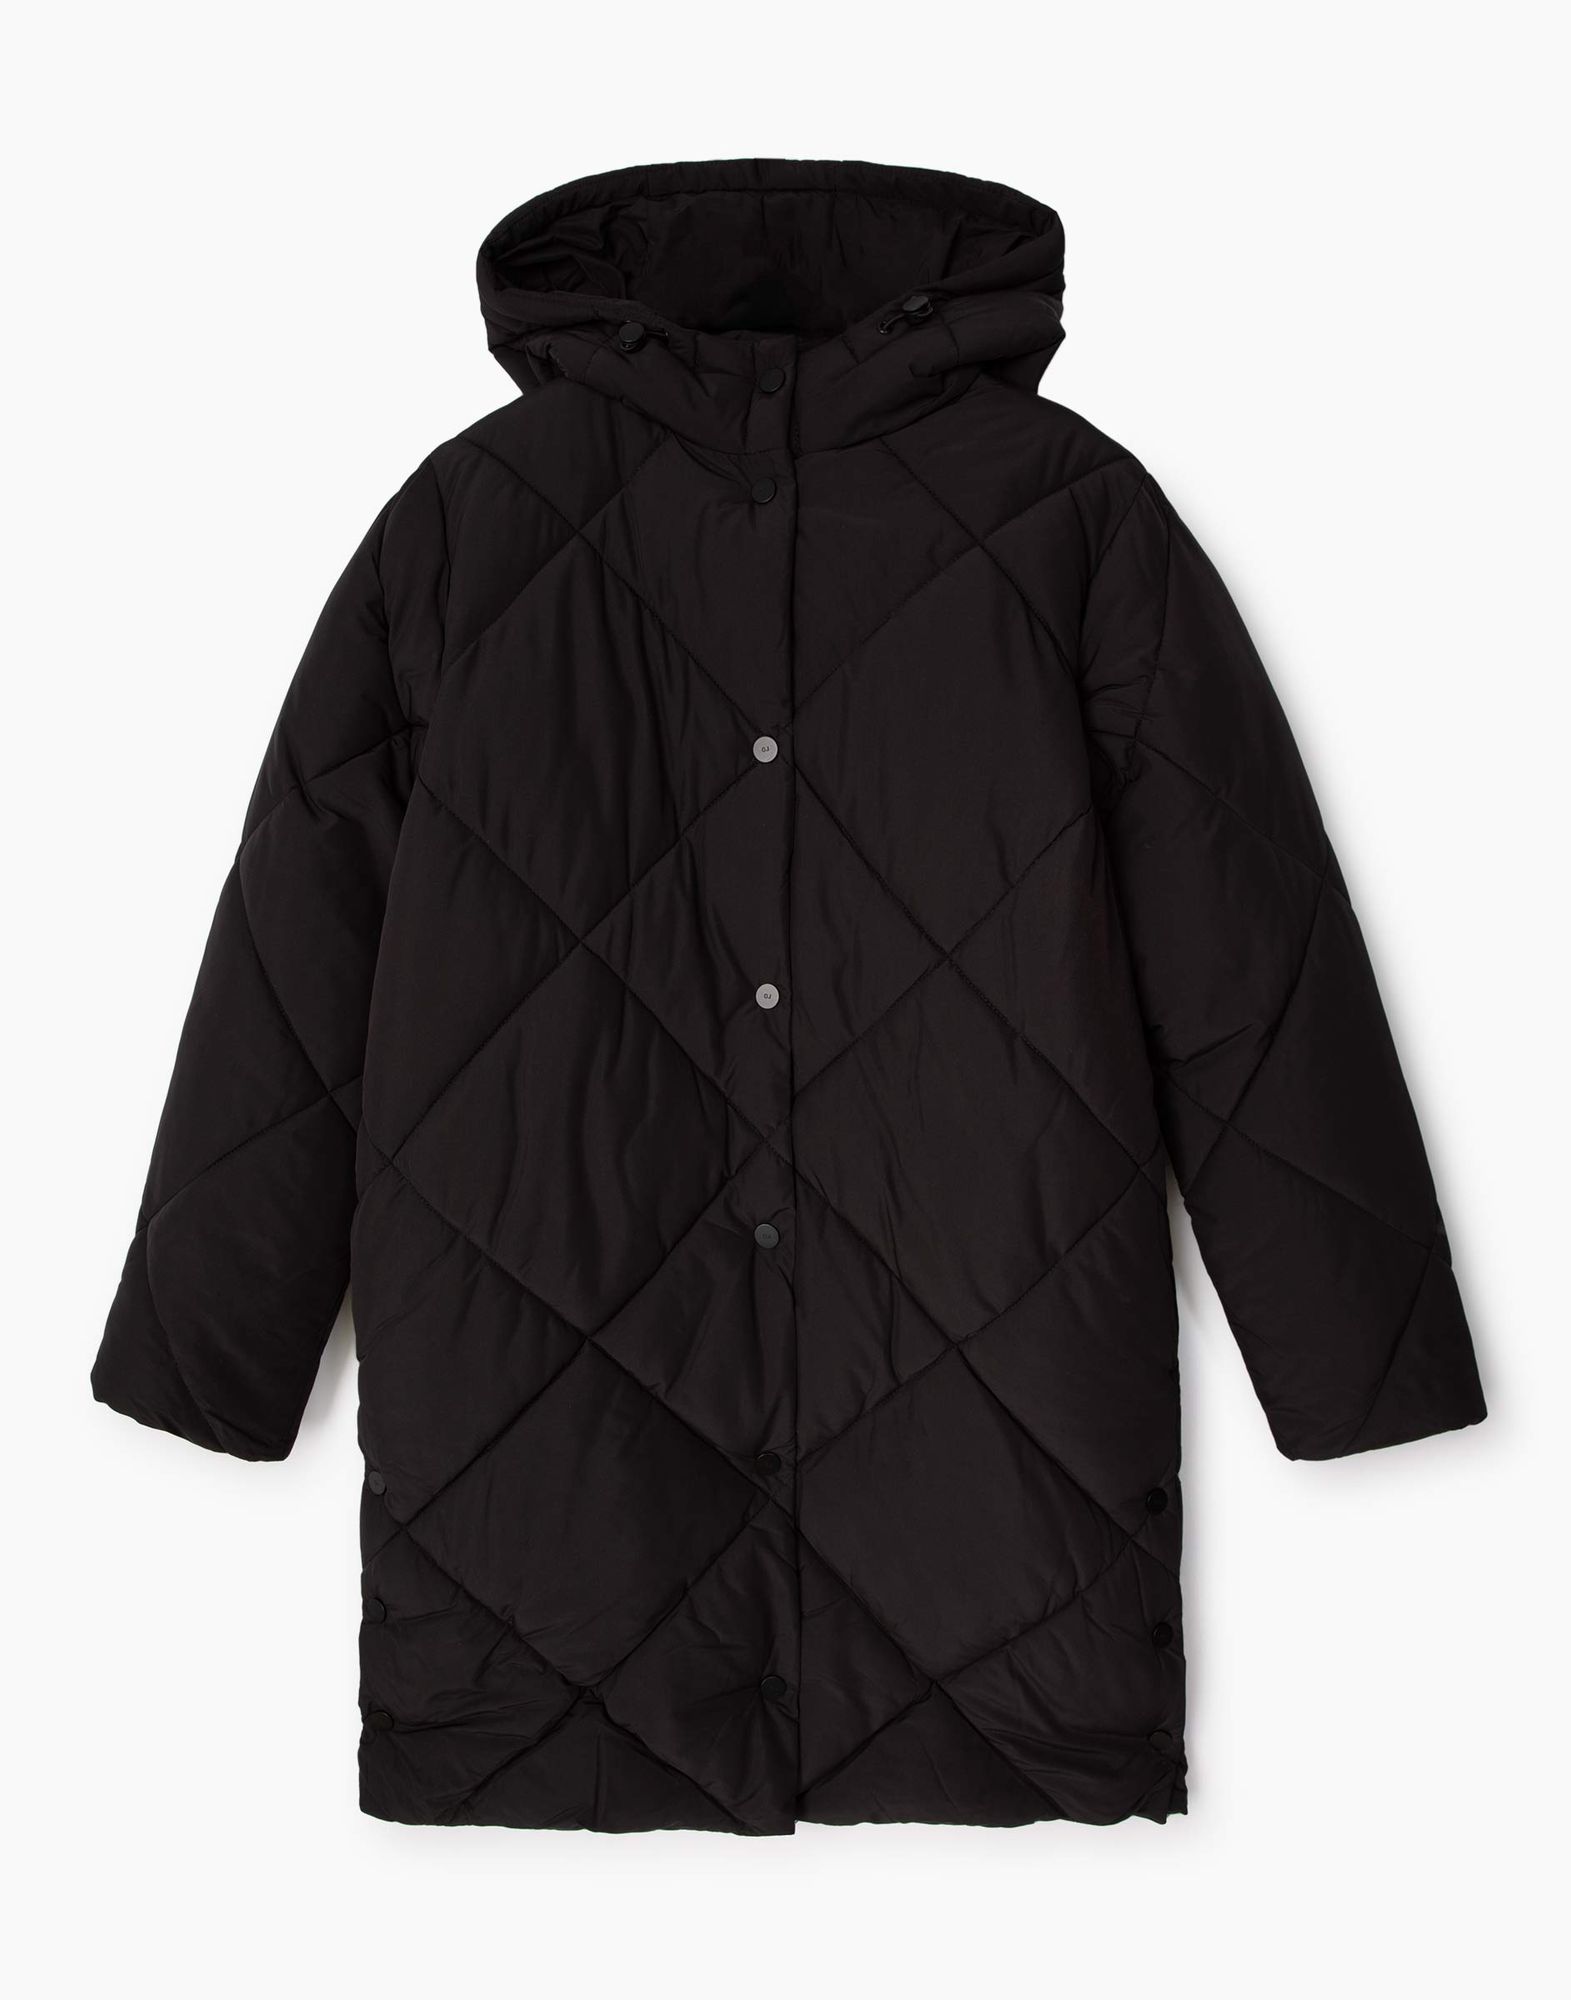 Чёрная утеплённая куртка на пуговицах для девочек-1